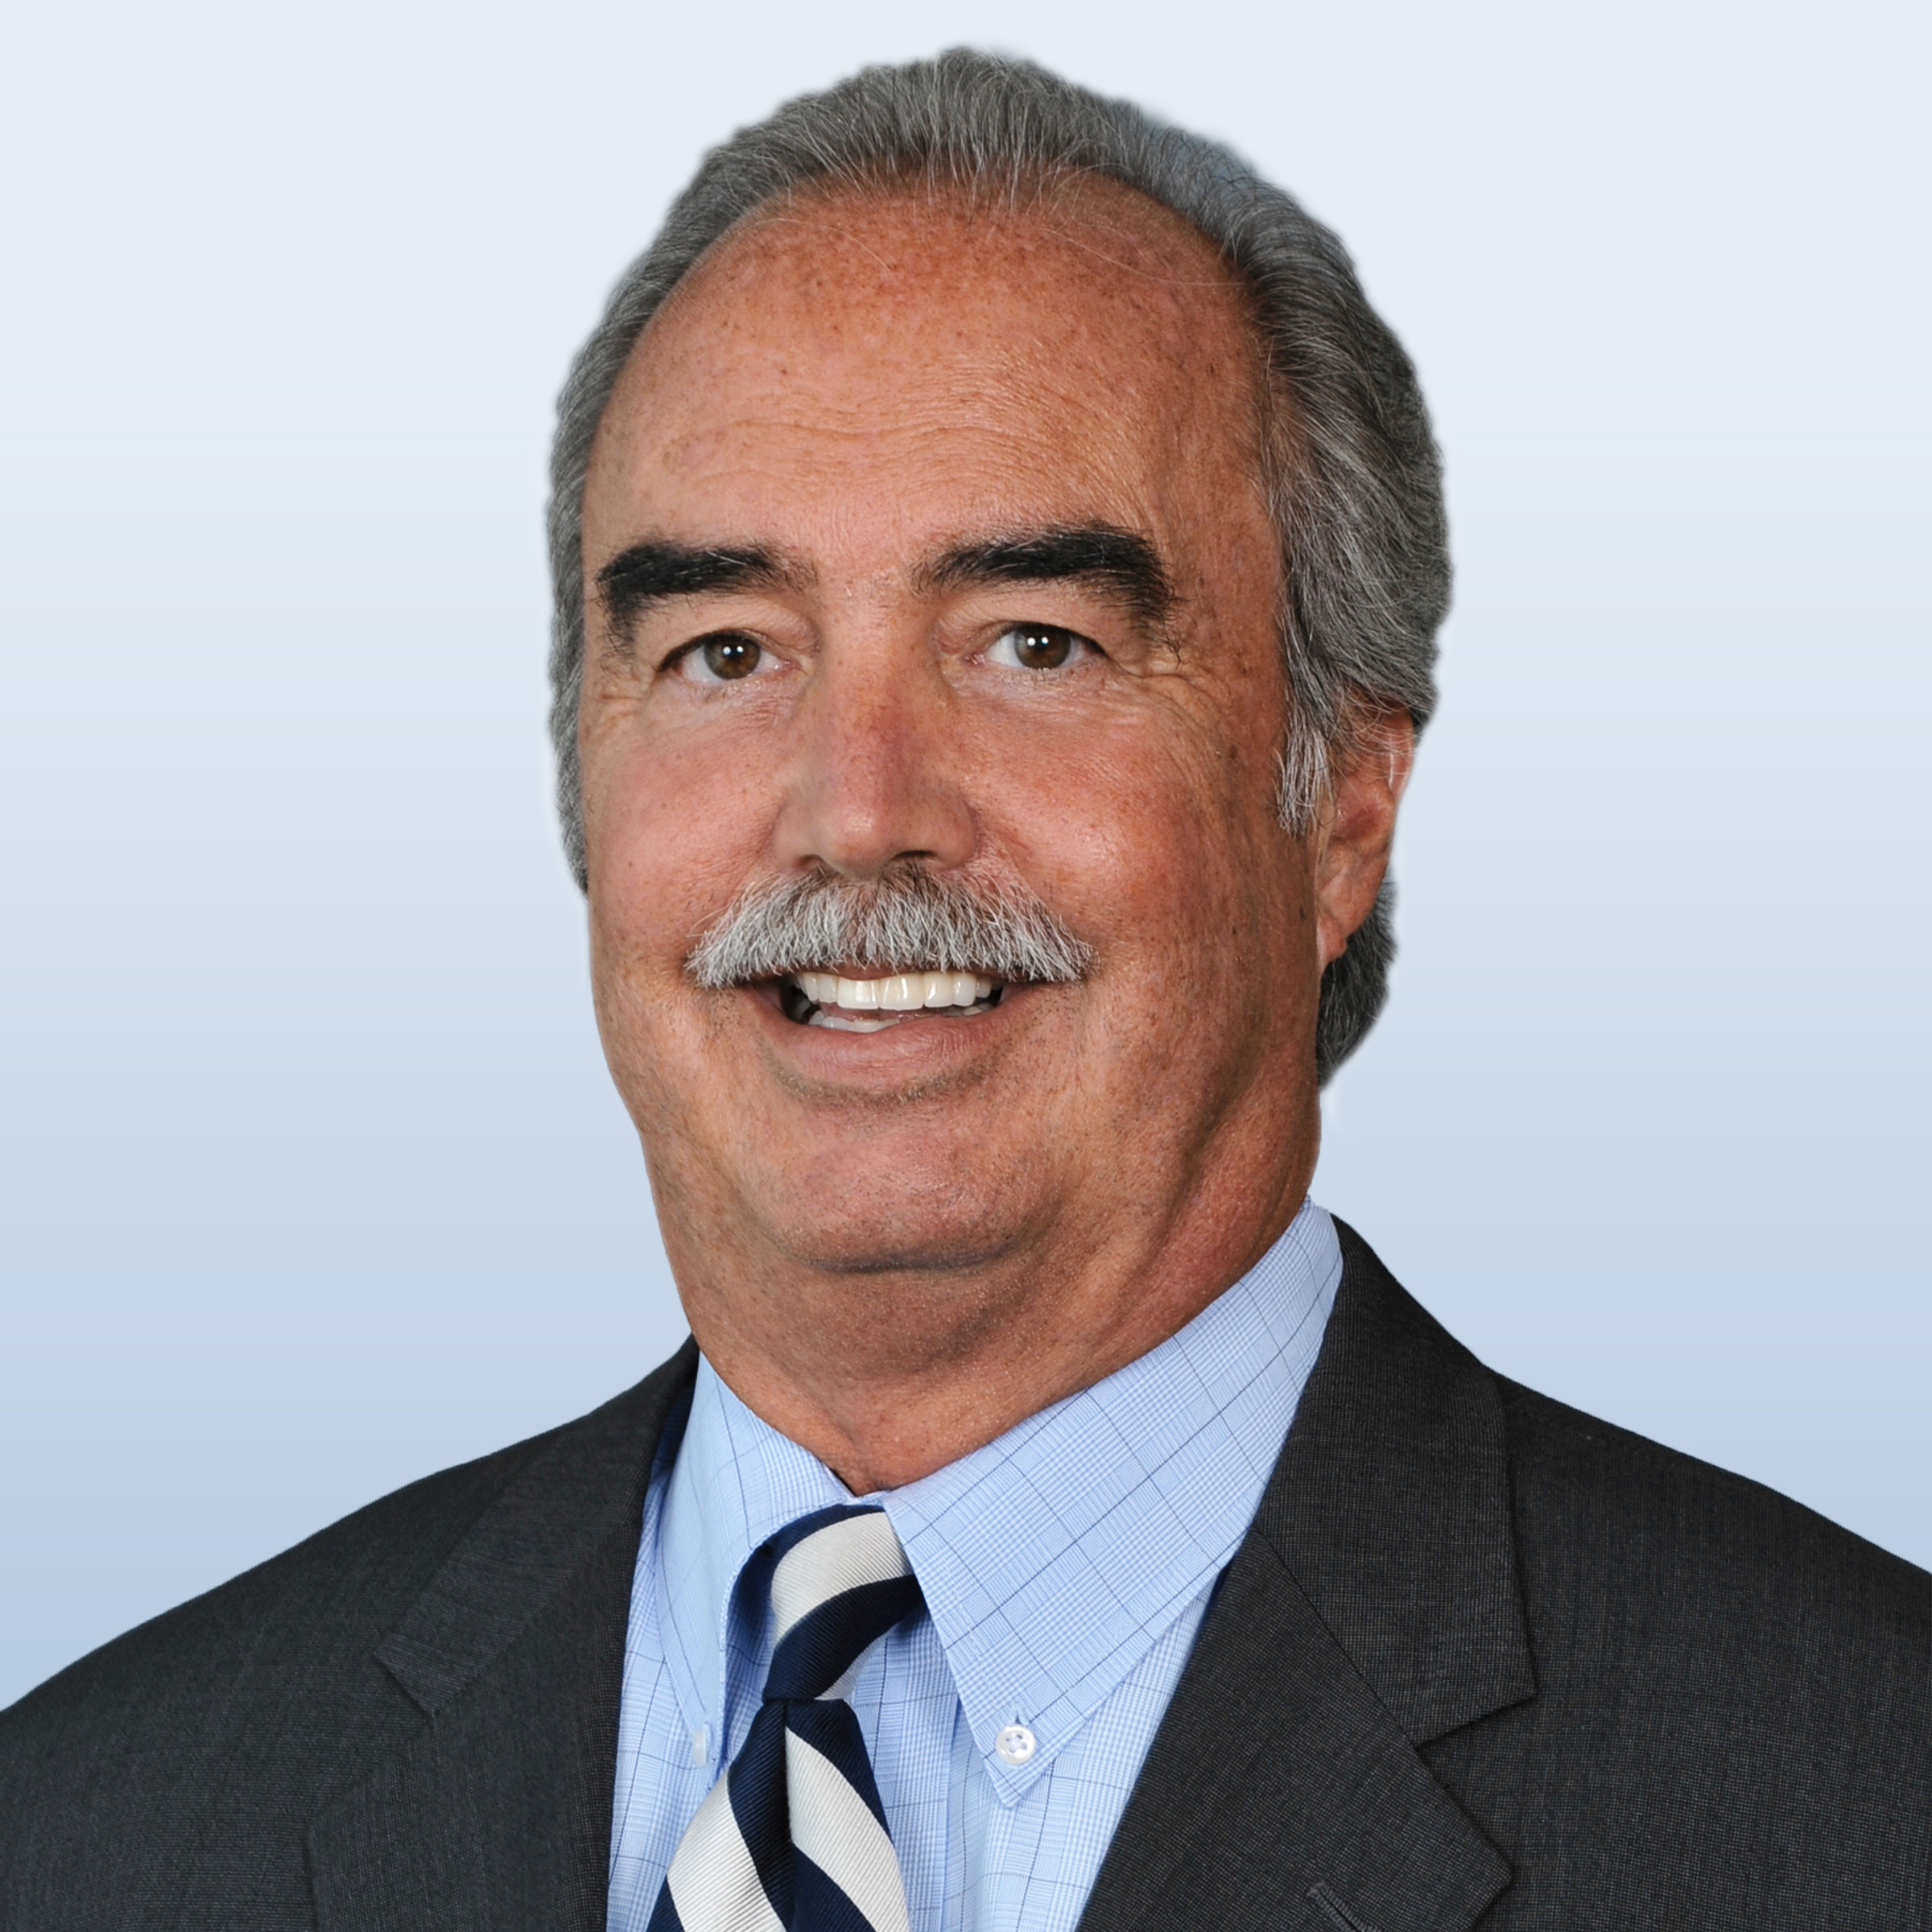 Michael D. Sharkey, President, MB Business Capital